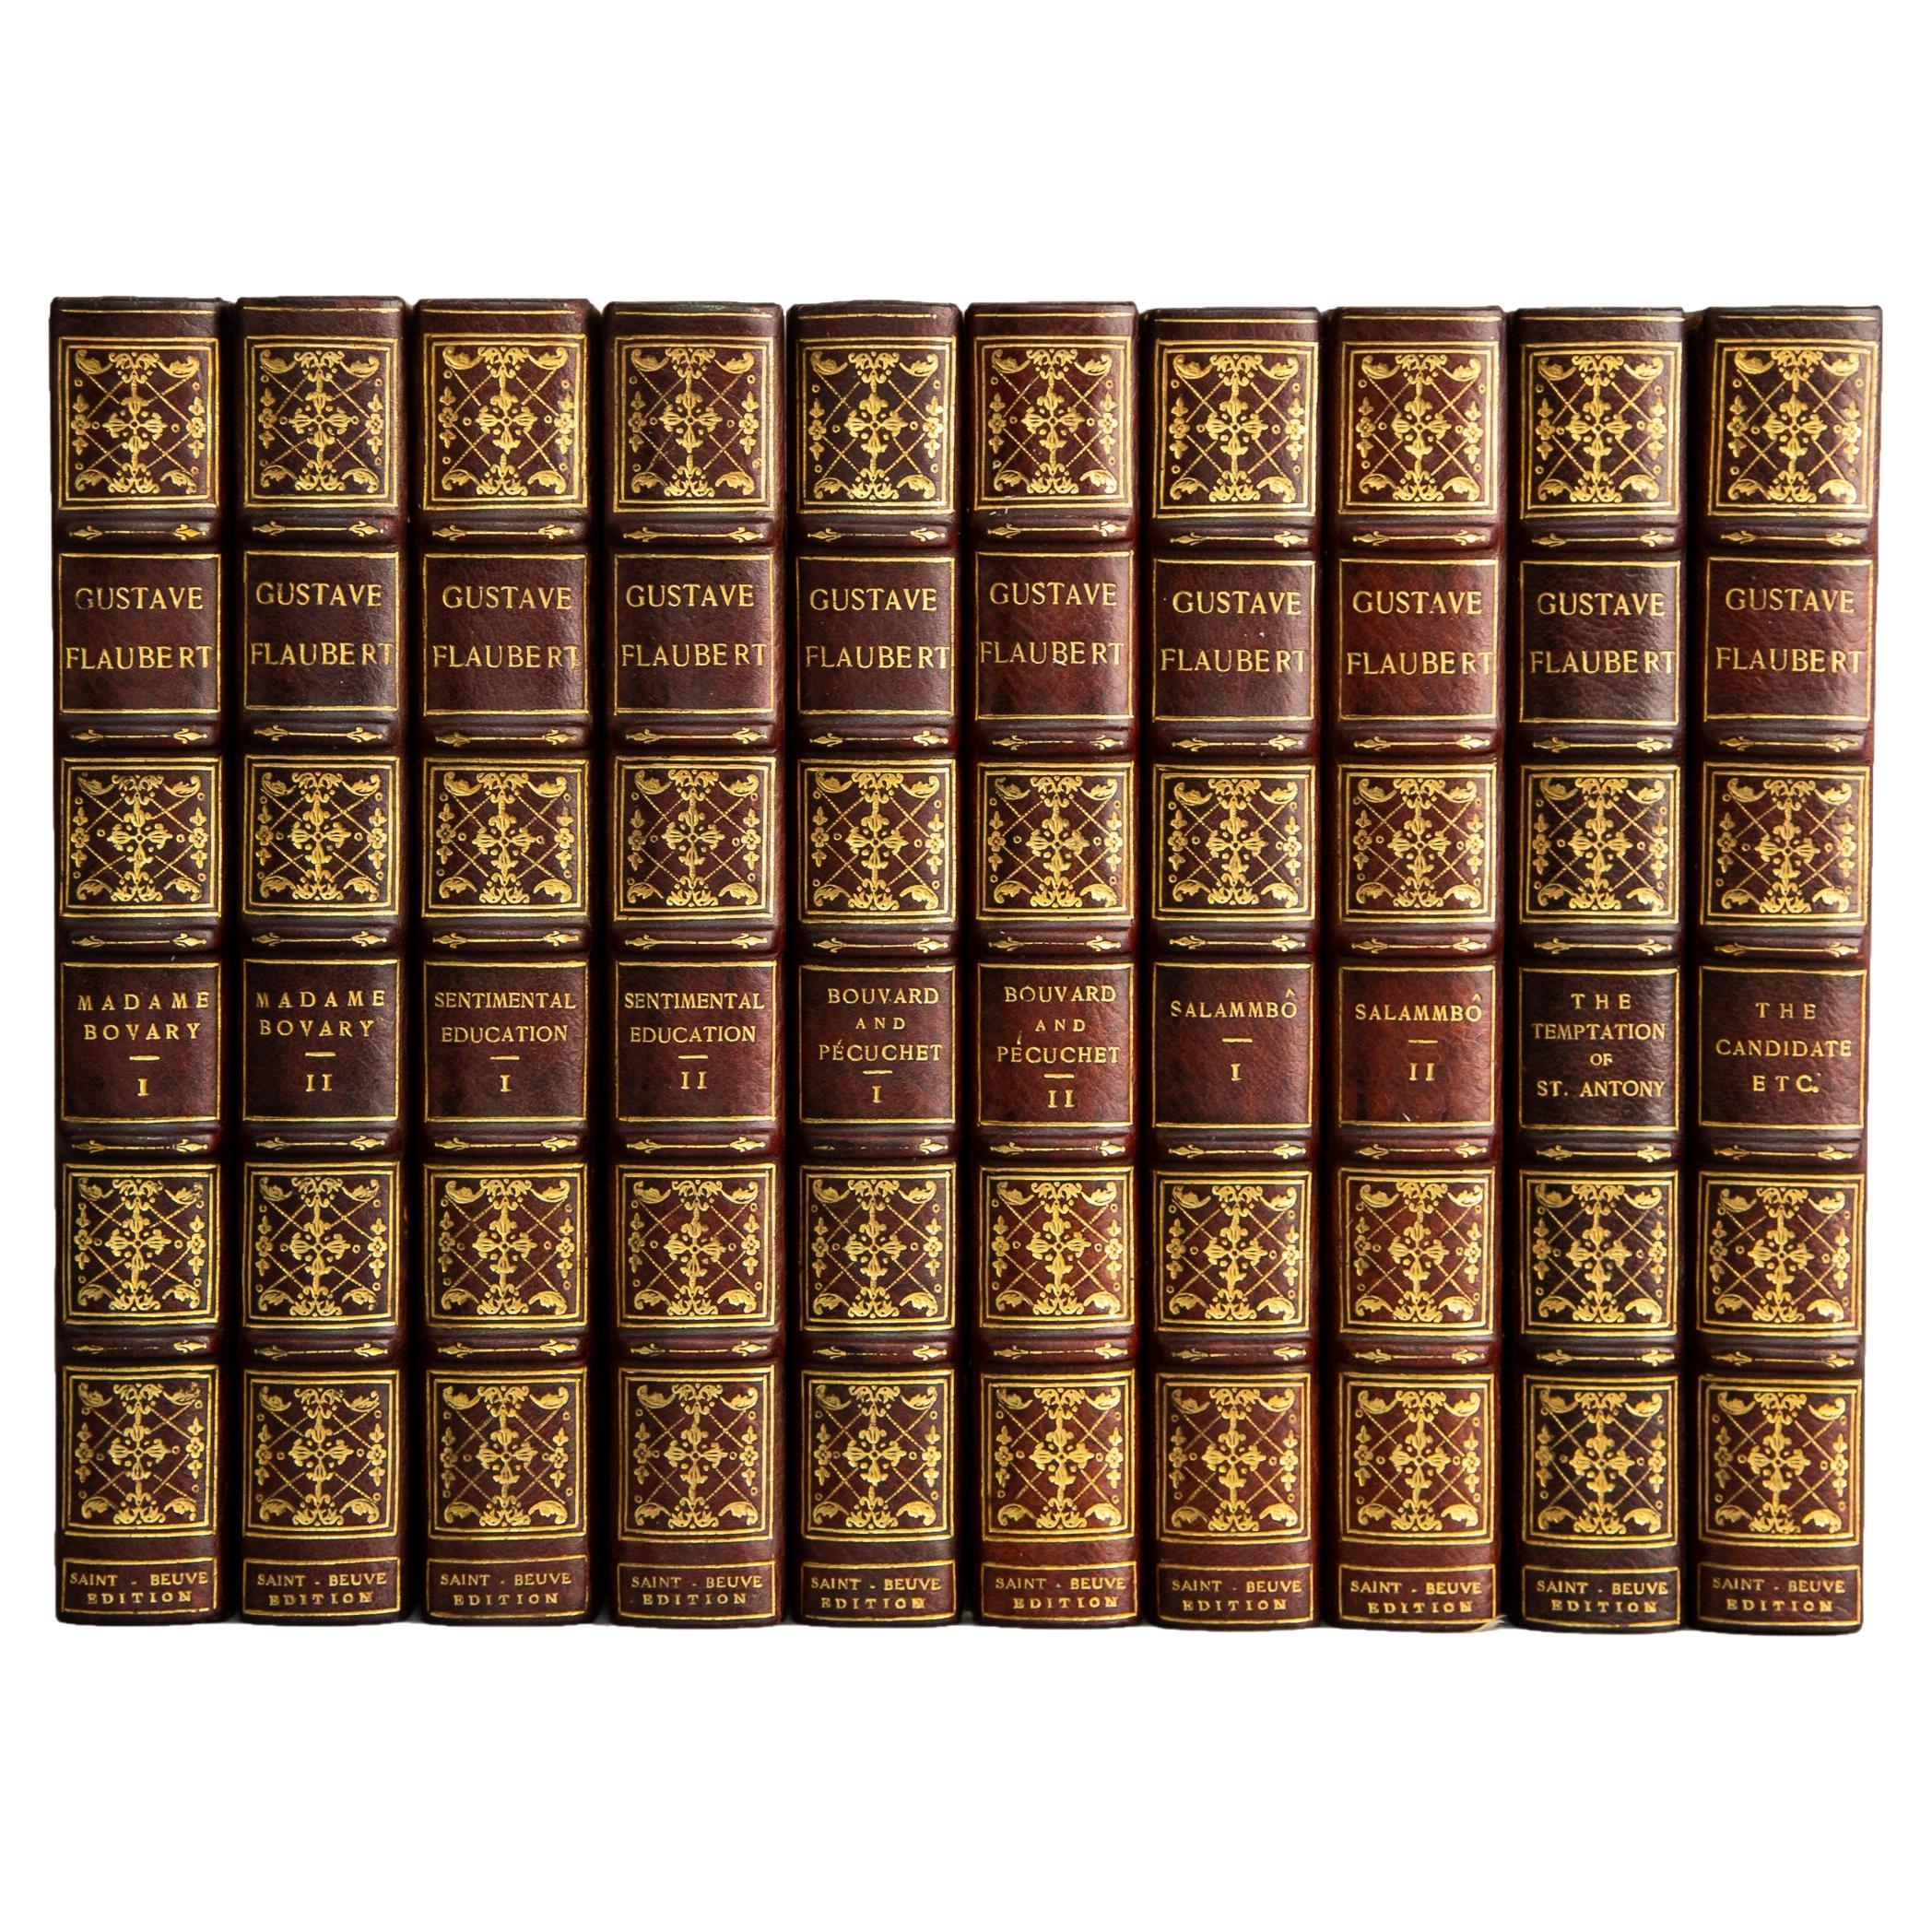 10 Volumes, Gustave Flaubert, The Complete Works of Gustave Flaubert